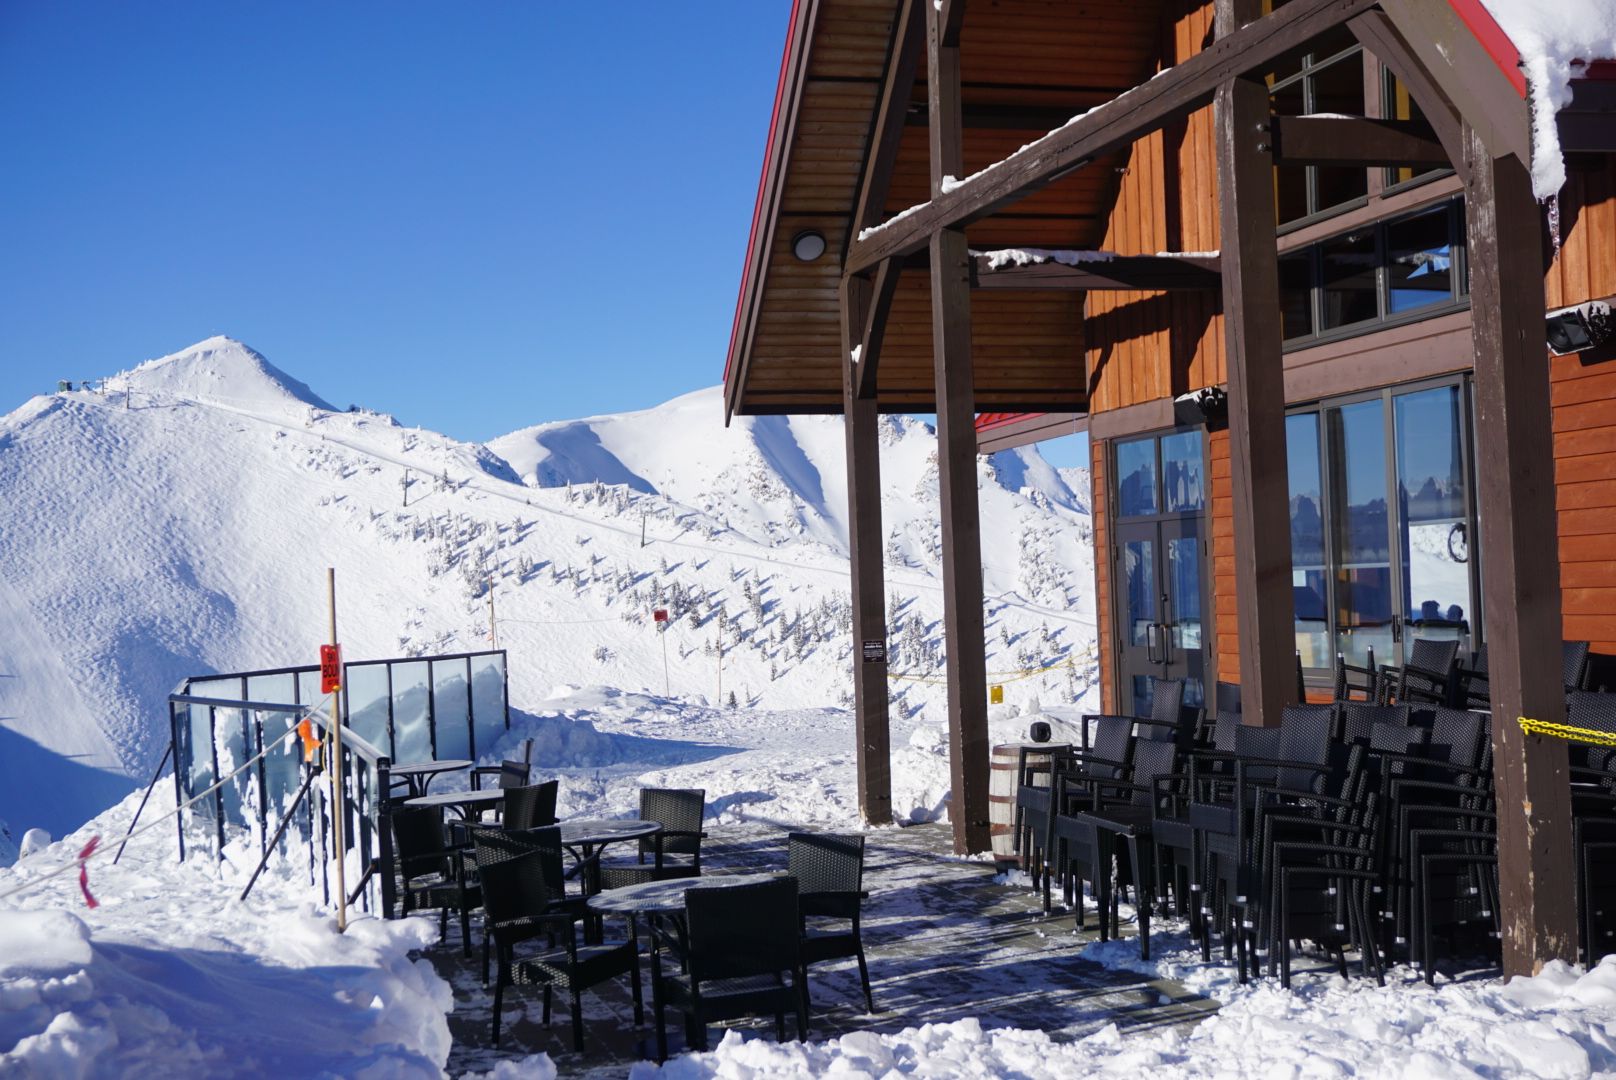 Early March storm snow sends BC ski resort into snowfall total record
season